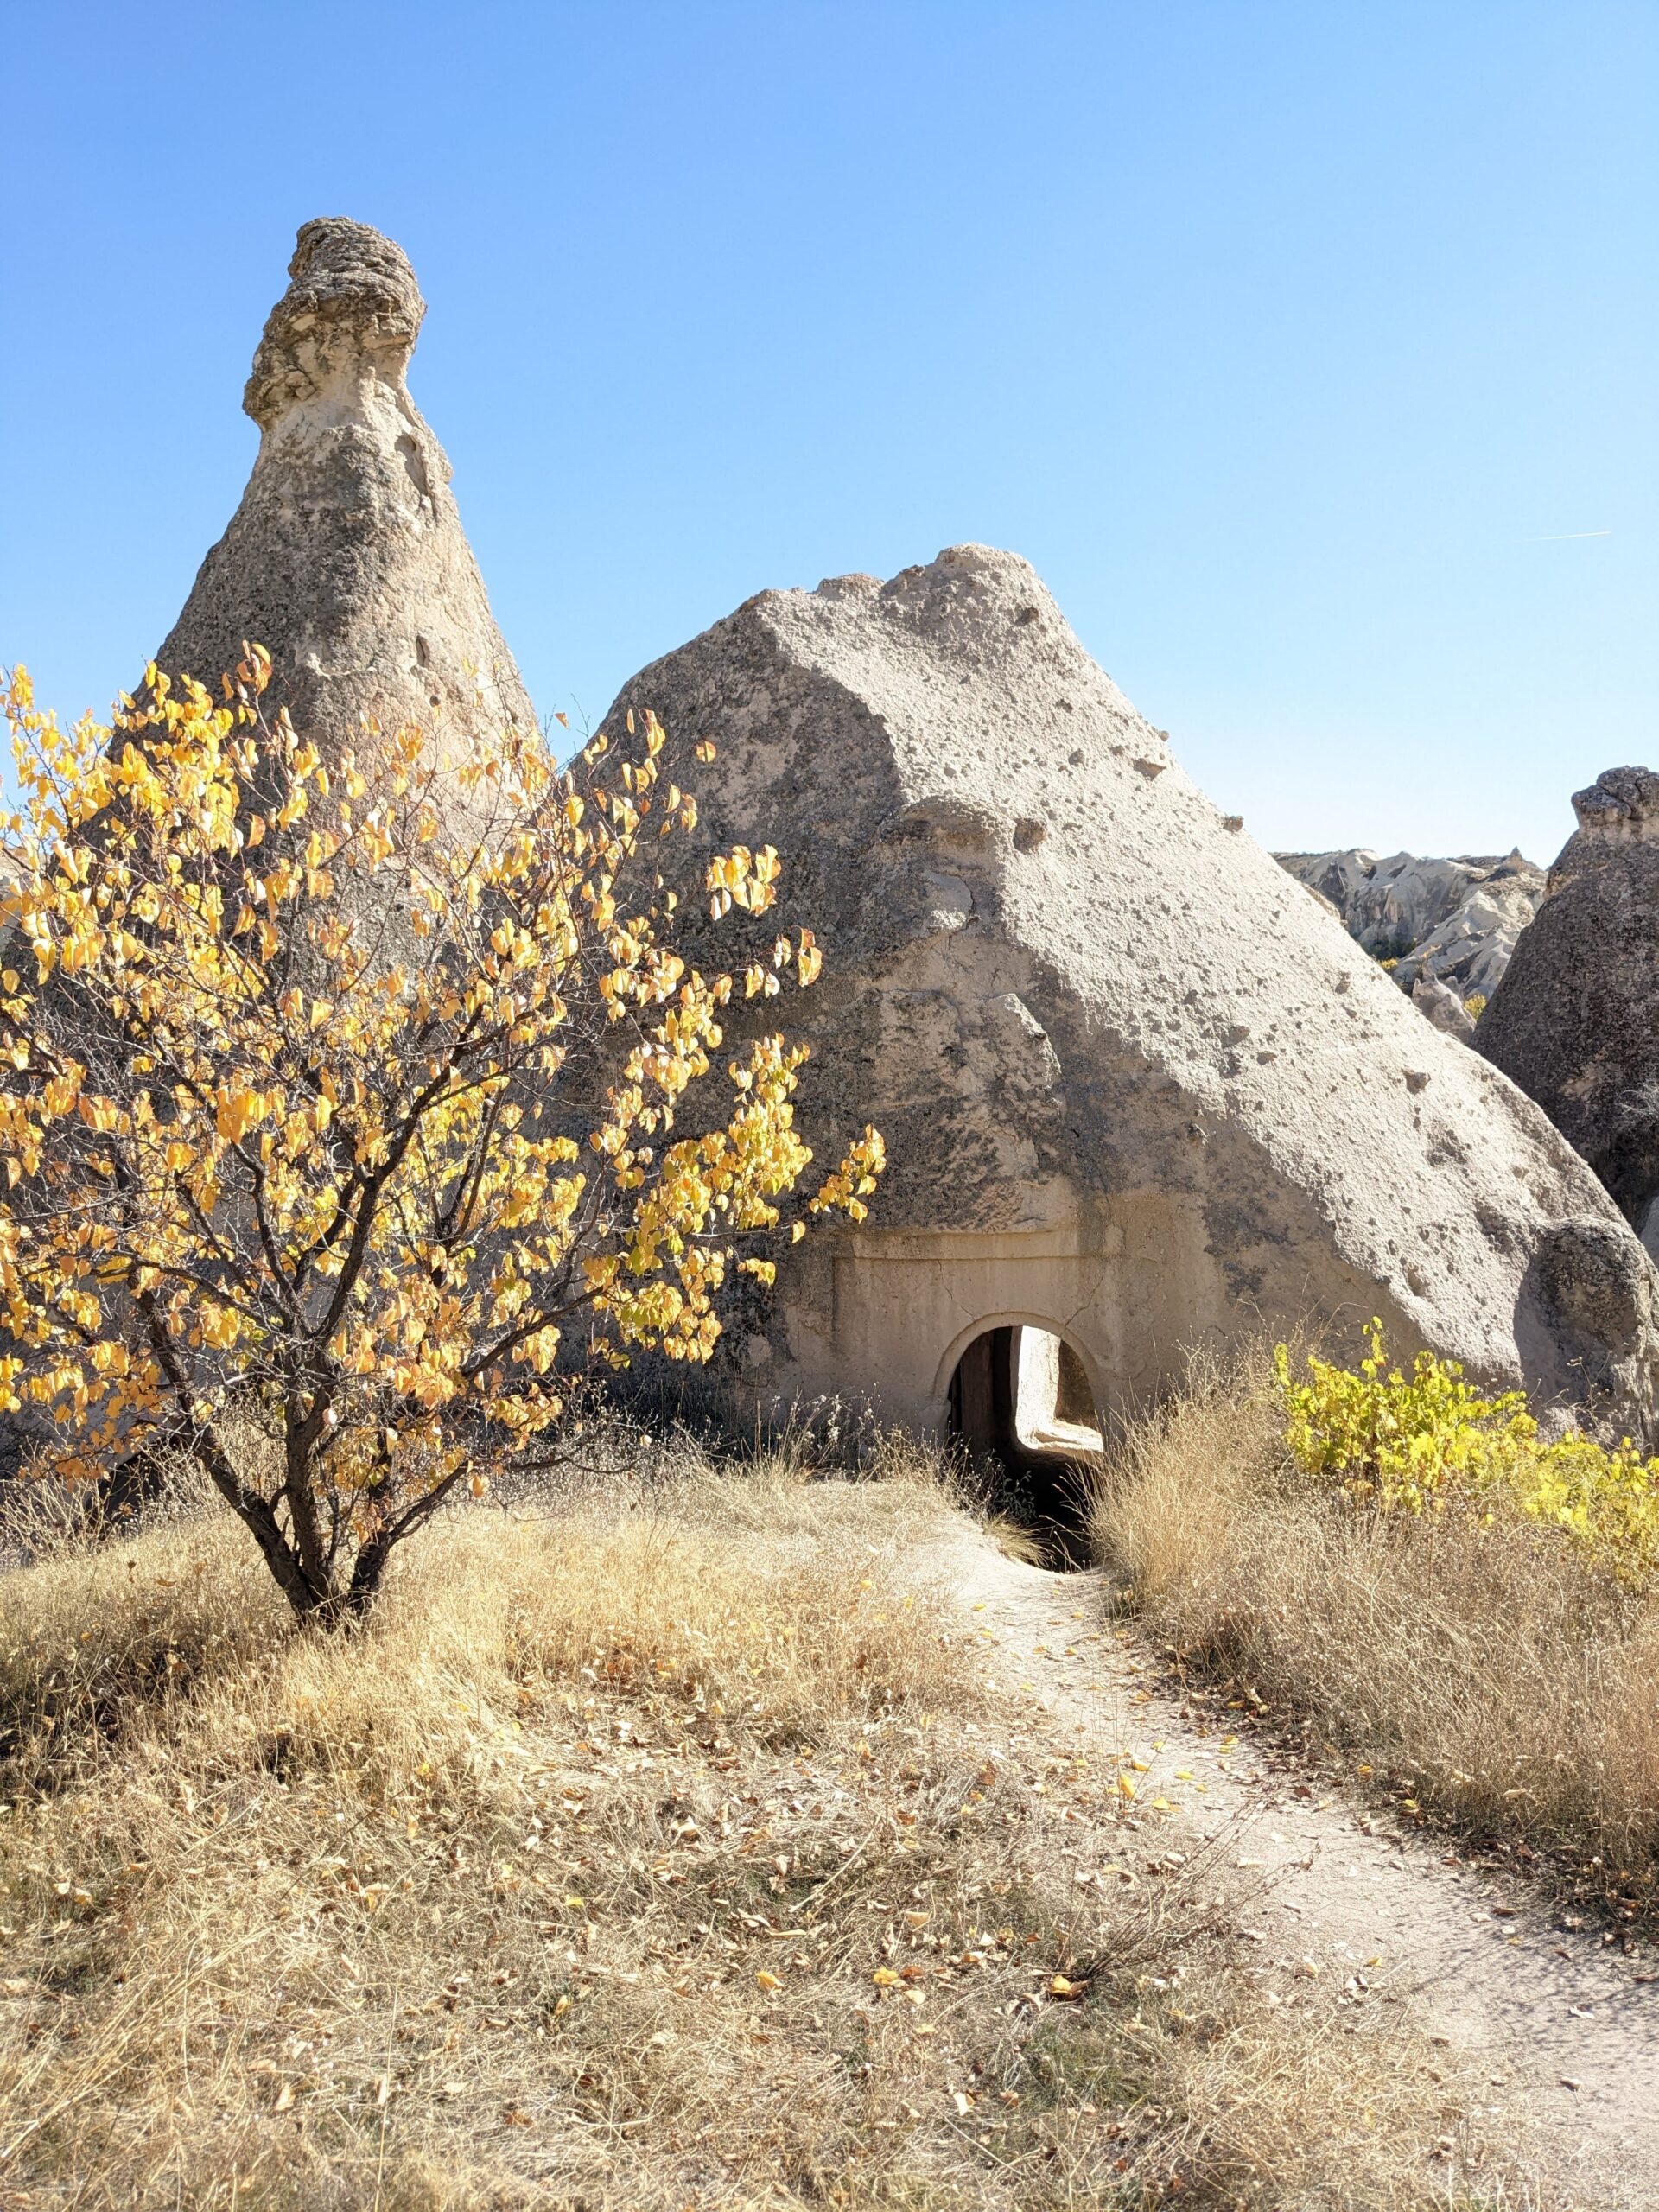 hidden church in swords valley, cappadocia